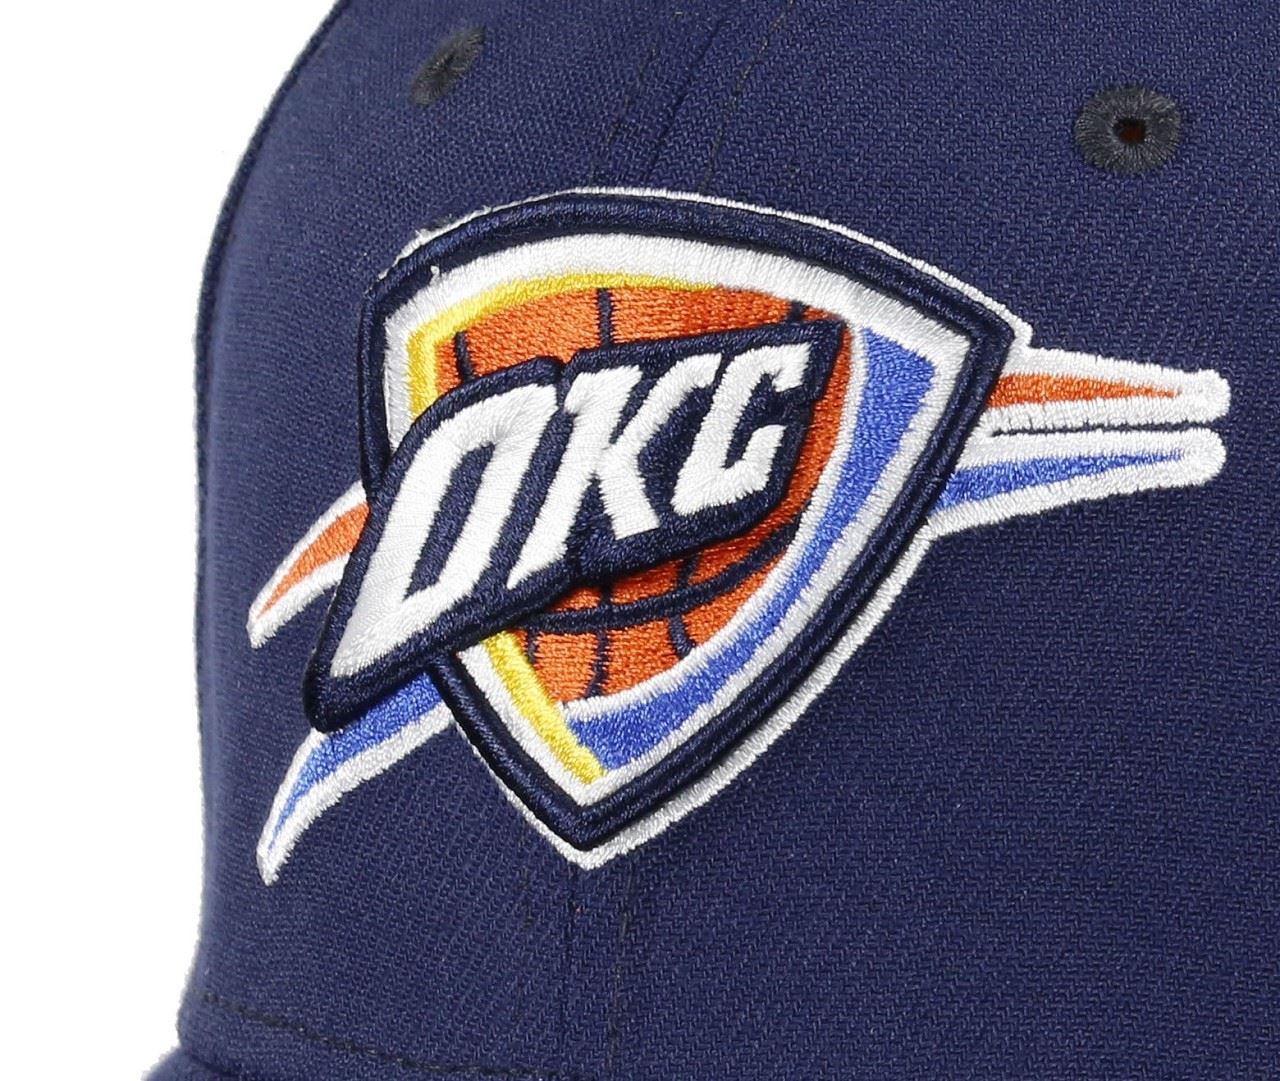 Oklahoma City Thunder NBA Essential 9Fifty Stretch Snapback Cap New Era 